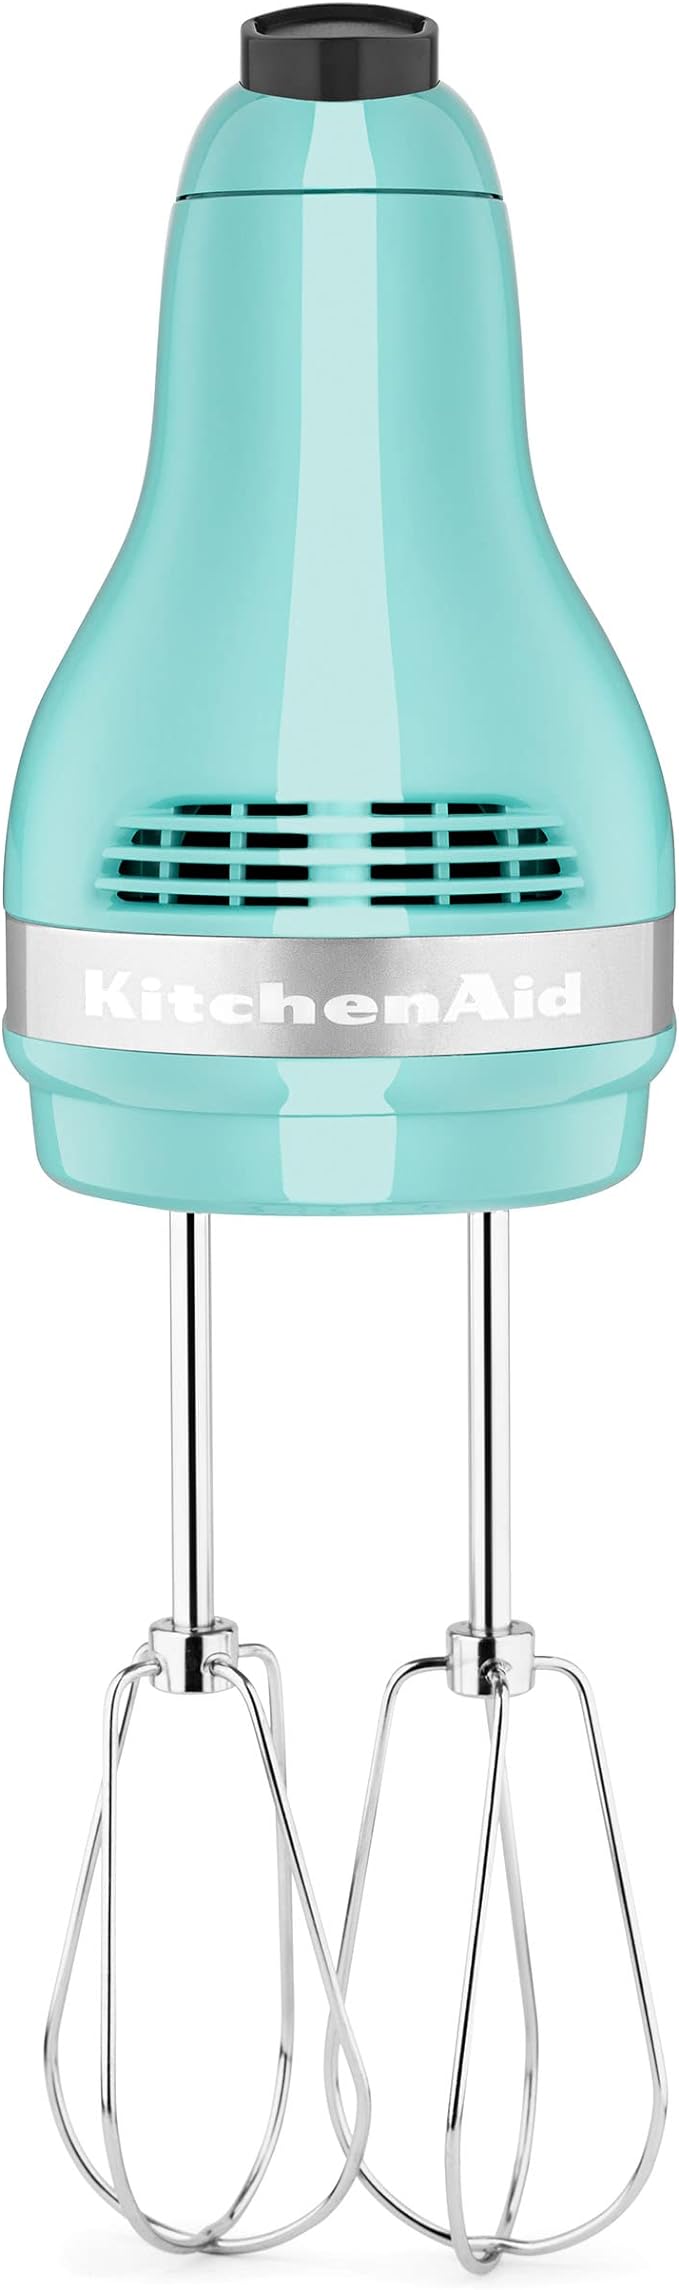 KitchenAid 5 Ultra Power Hand Mixer Review